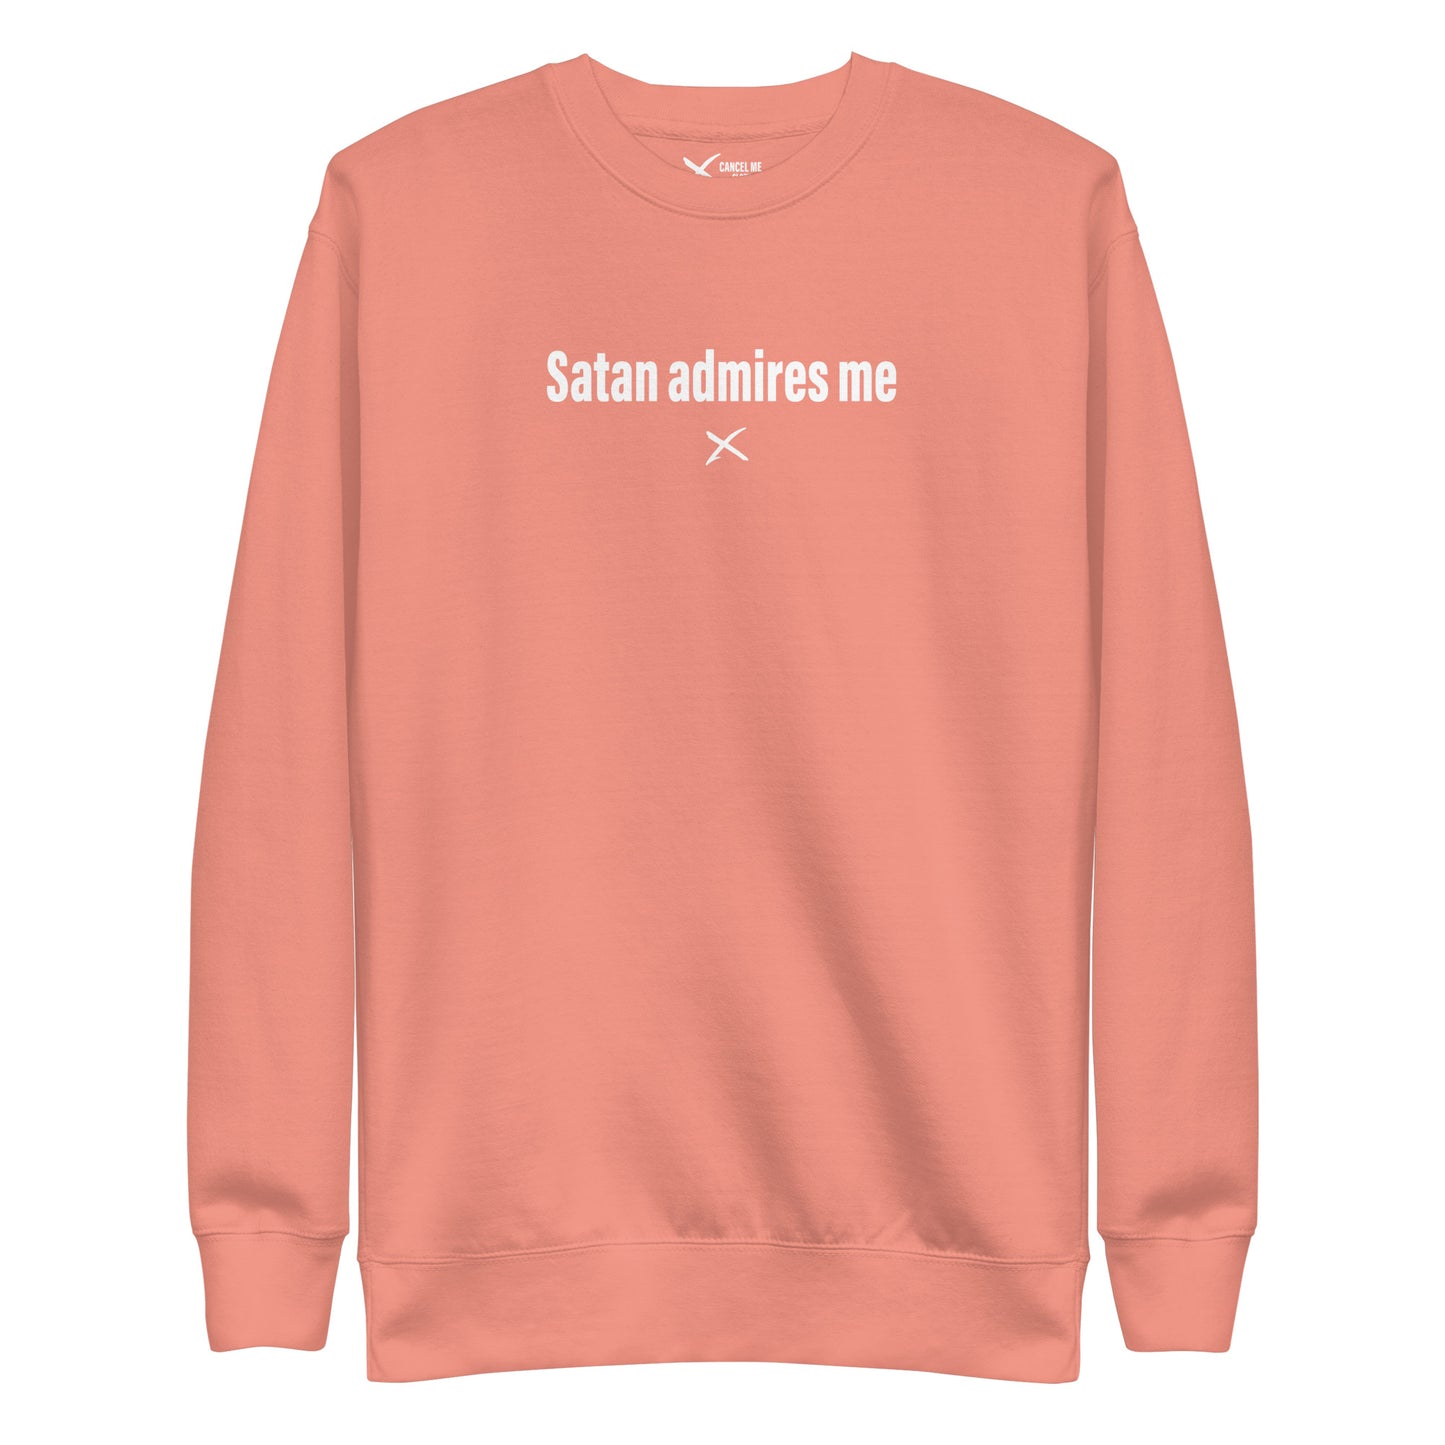 Satan admires me - Sweatshirt